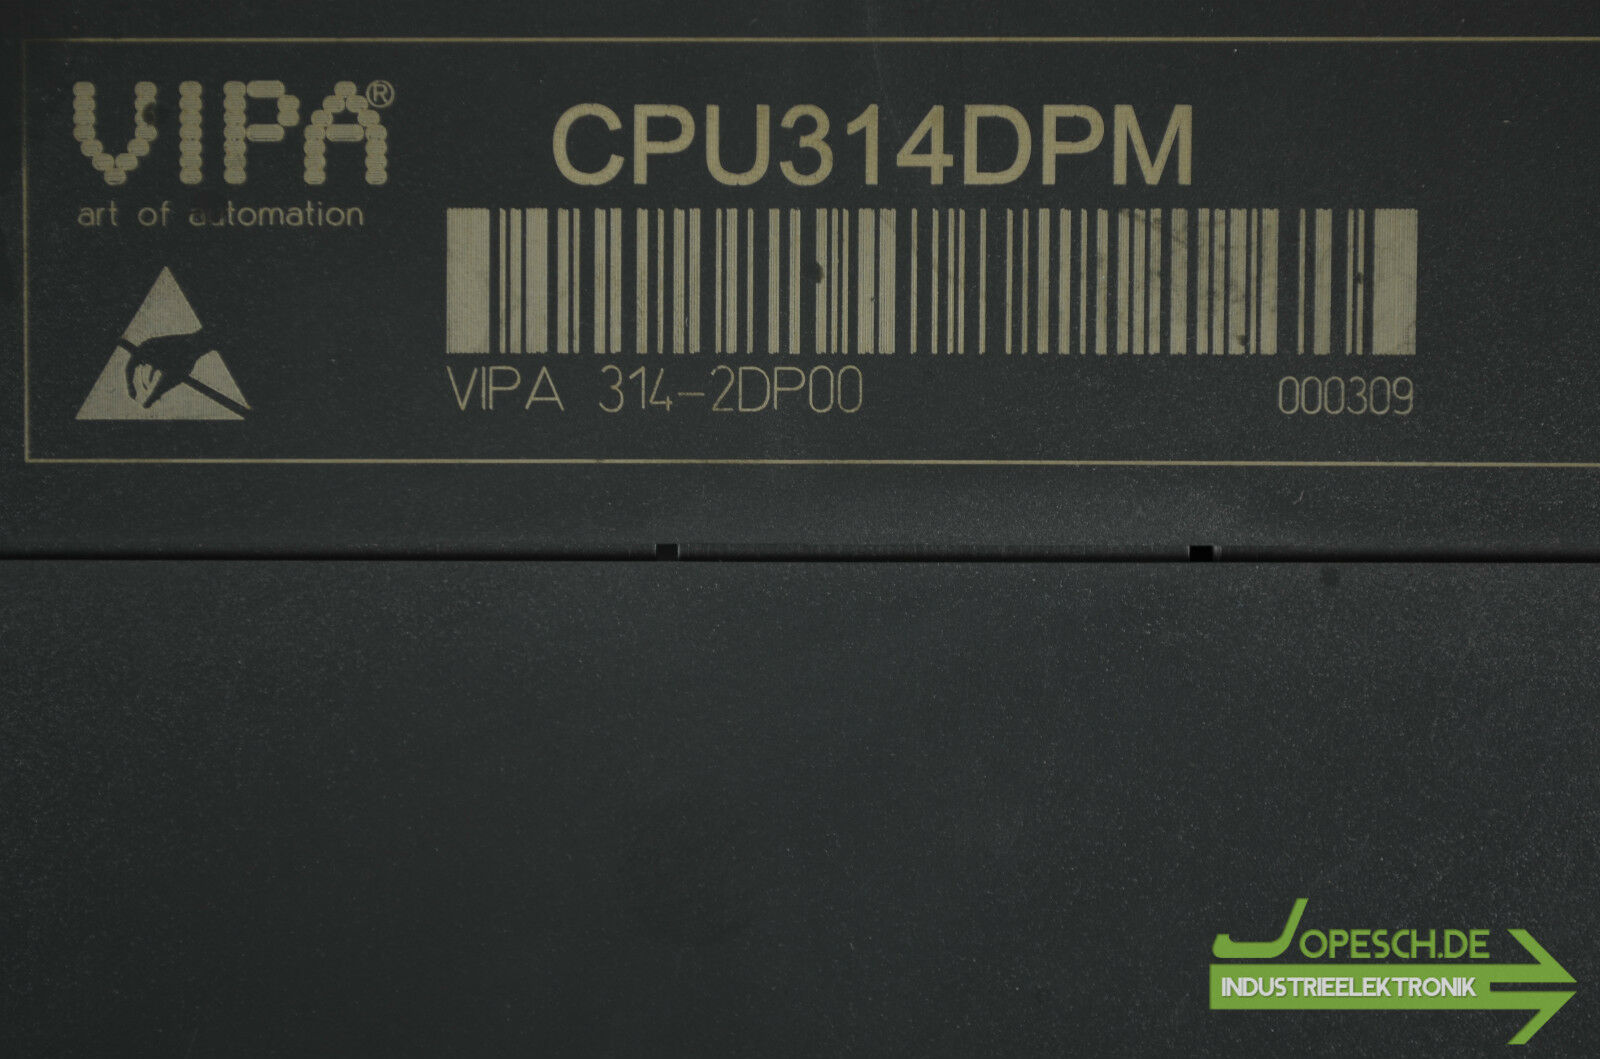 Vipa CPU 314DPM 314-2DP00 inkl. MMC